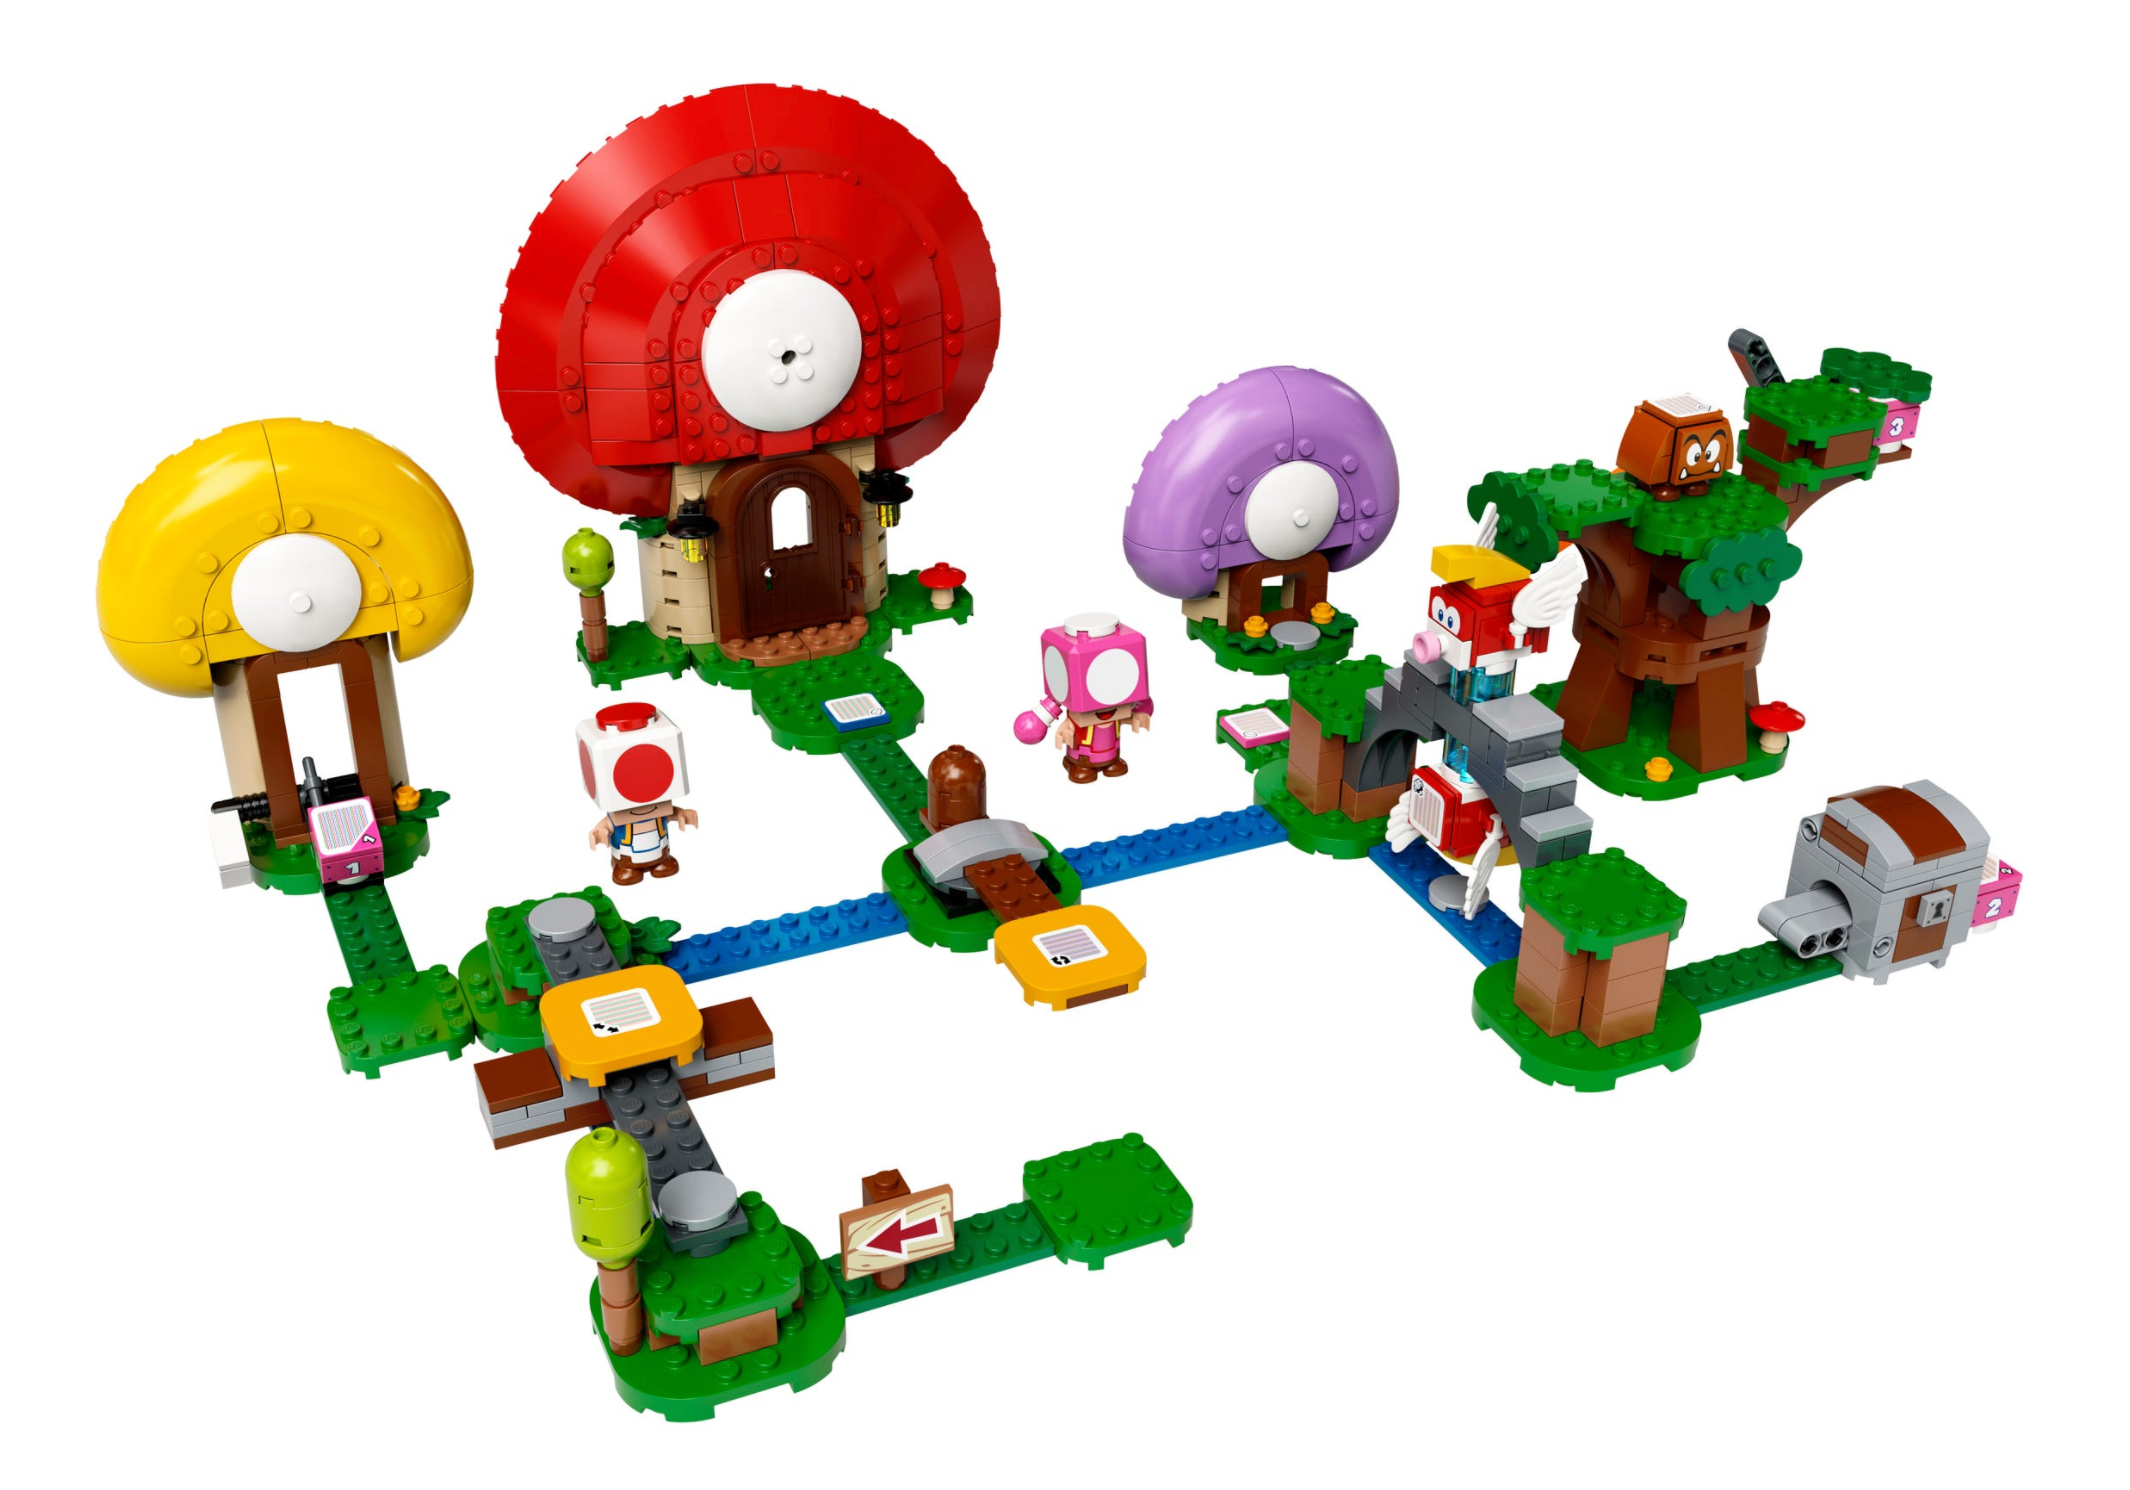 LEGO: Super Mario - Toad's Treasure Hunt Expansion Set